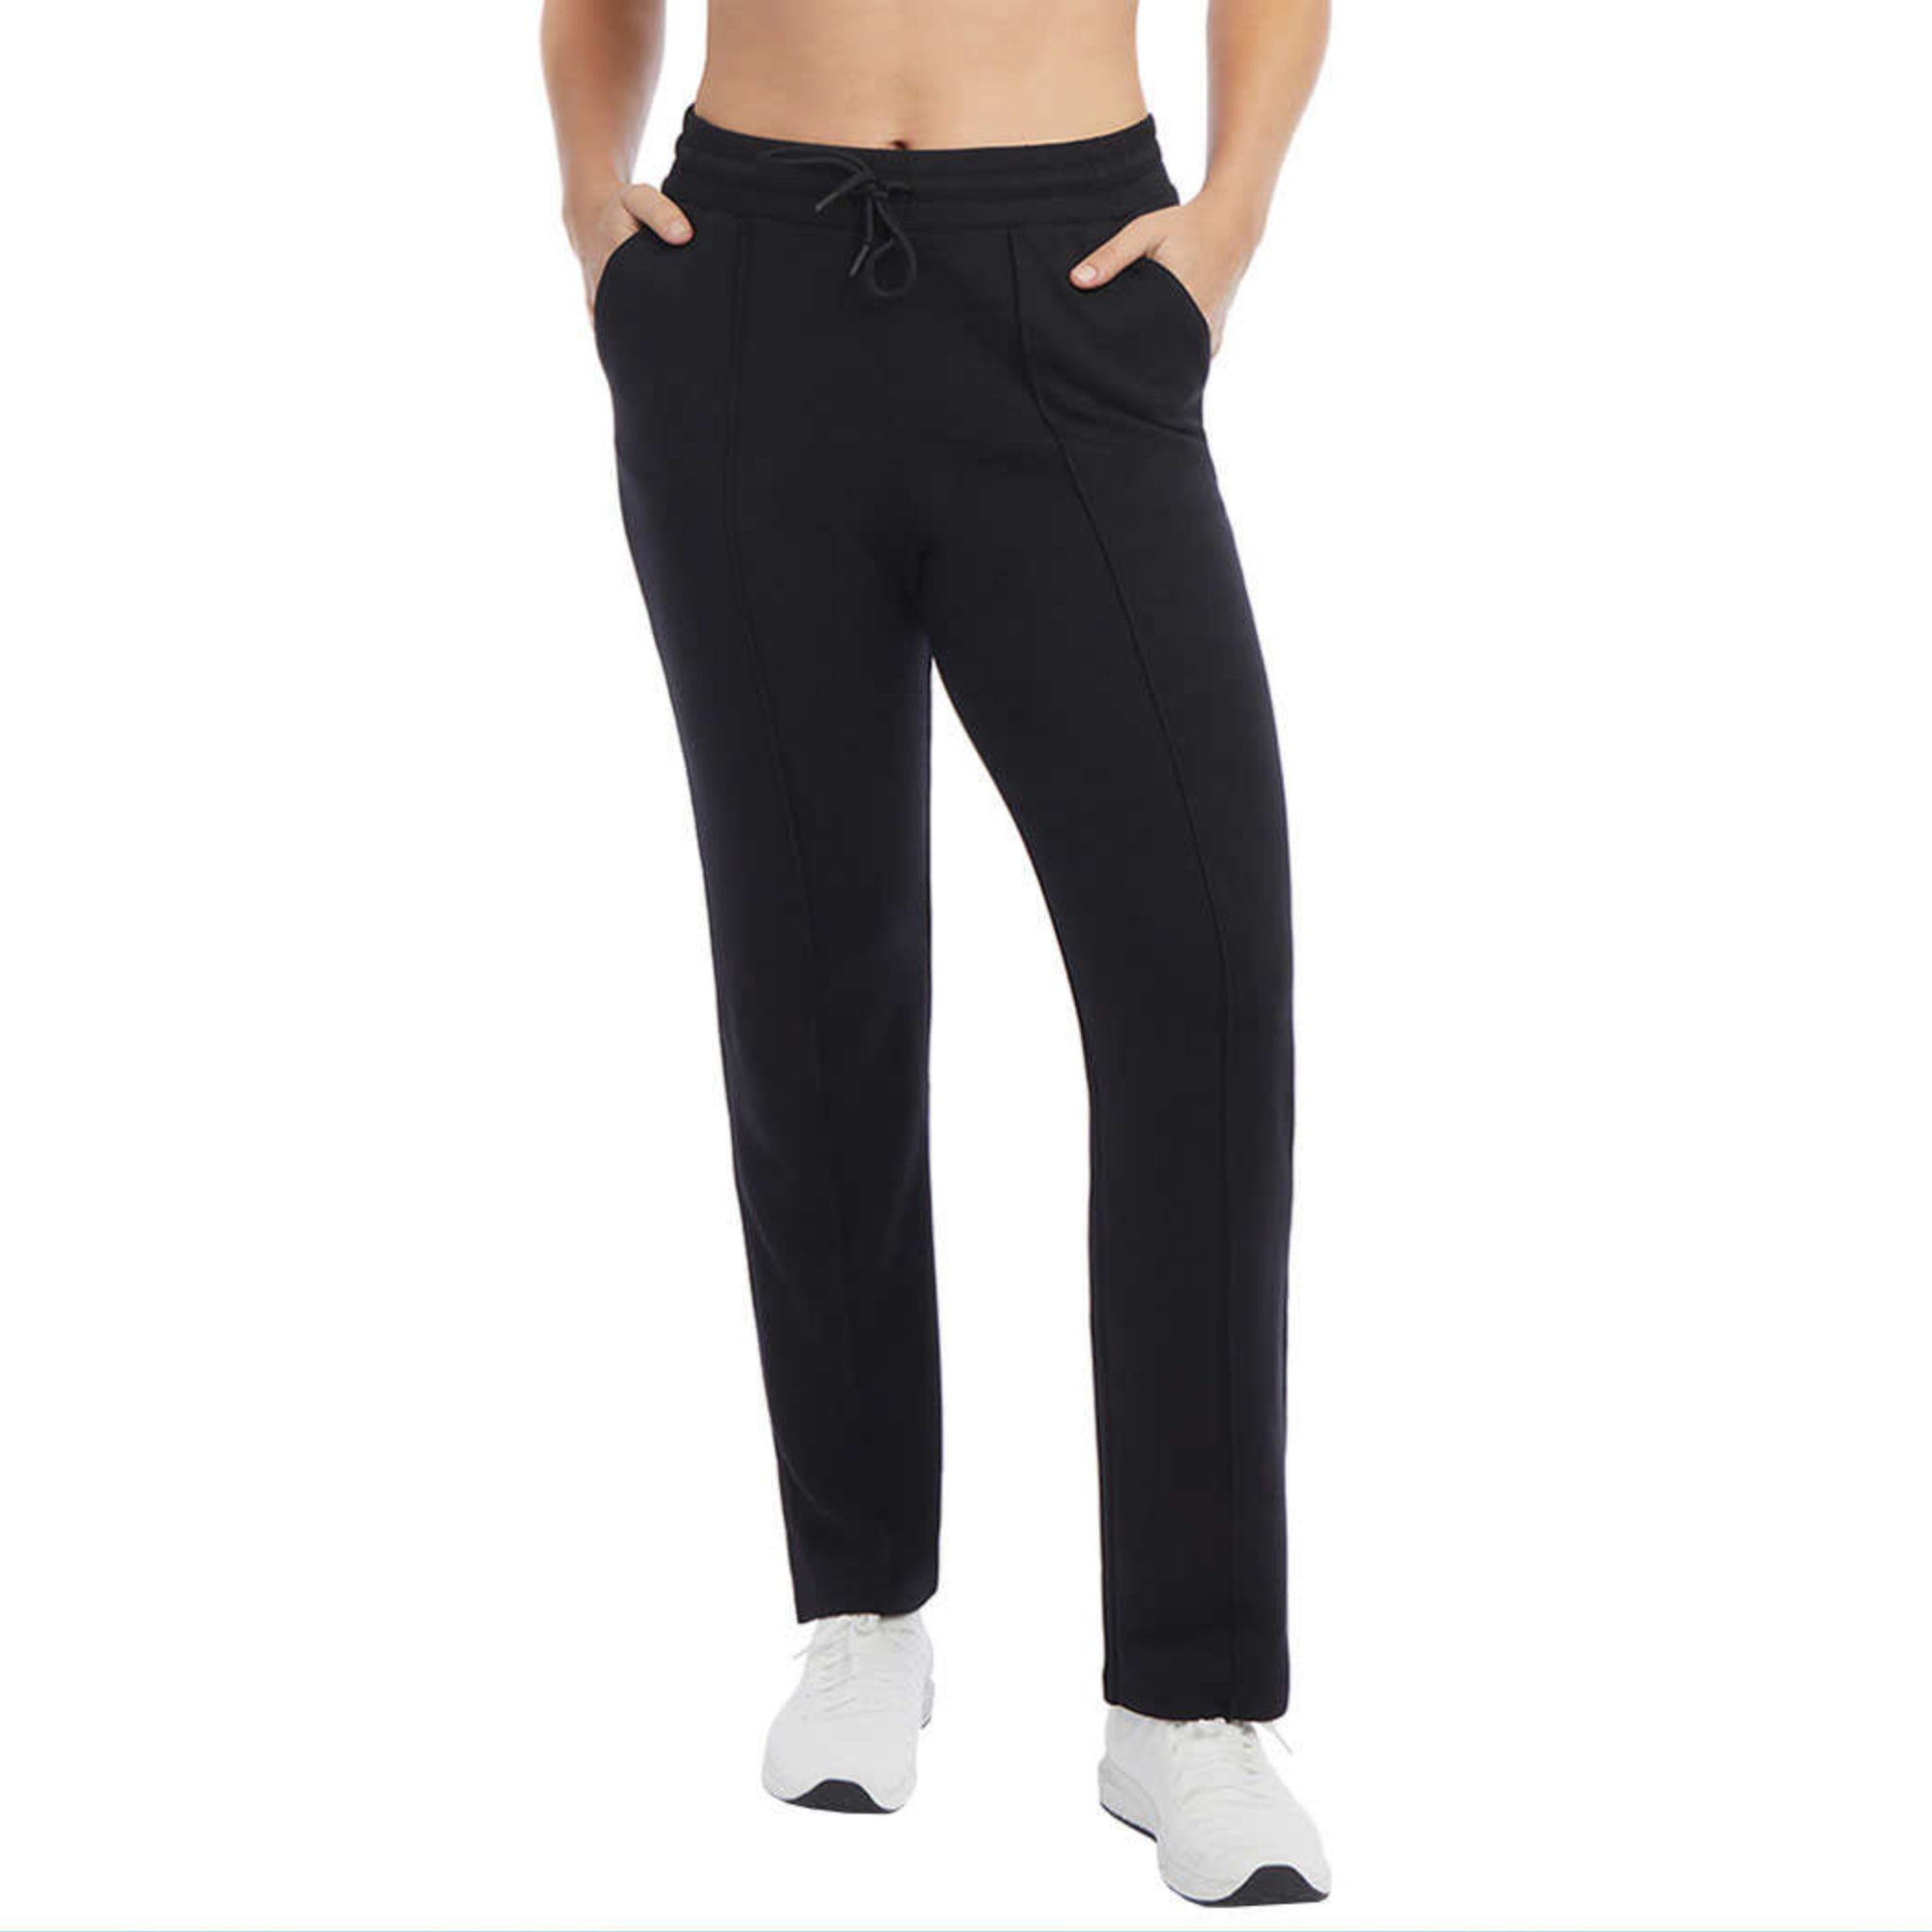 Danskin brand women's leggings with pockets 80%... - Depop